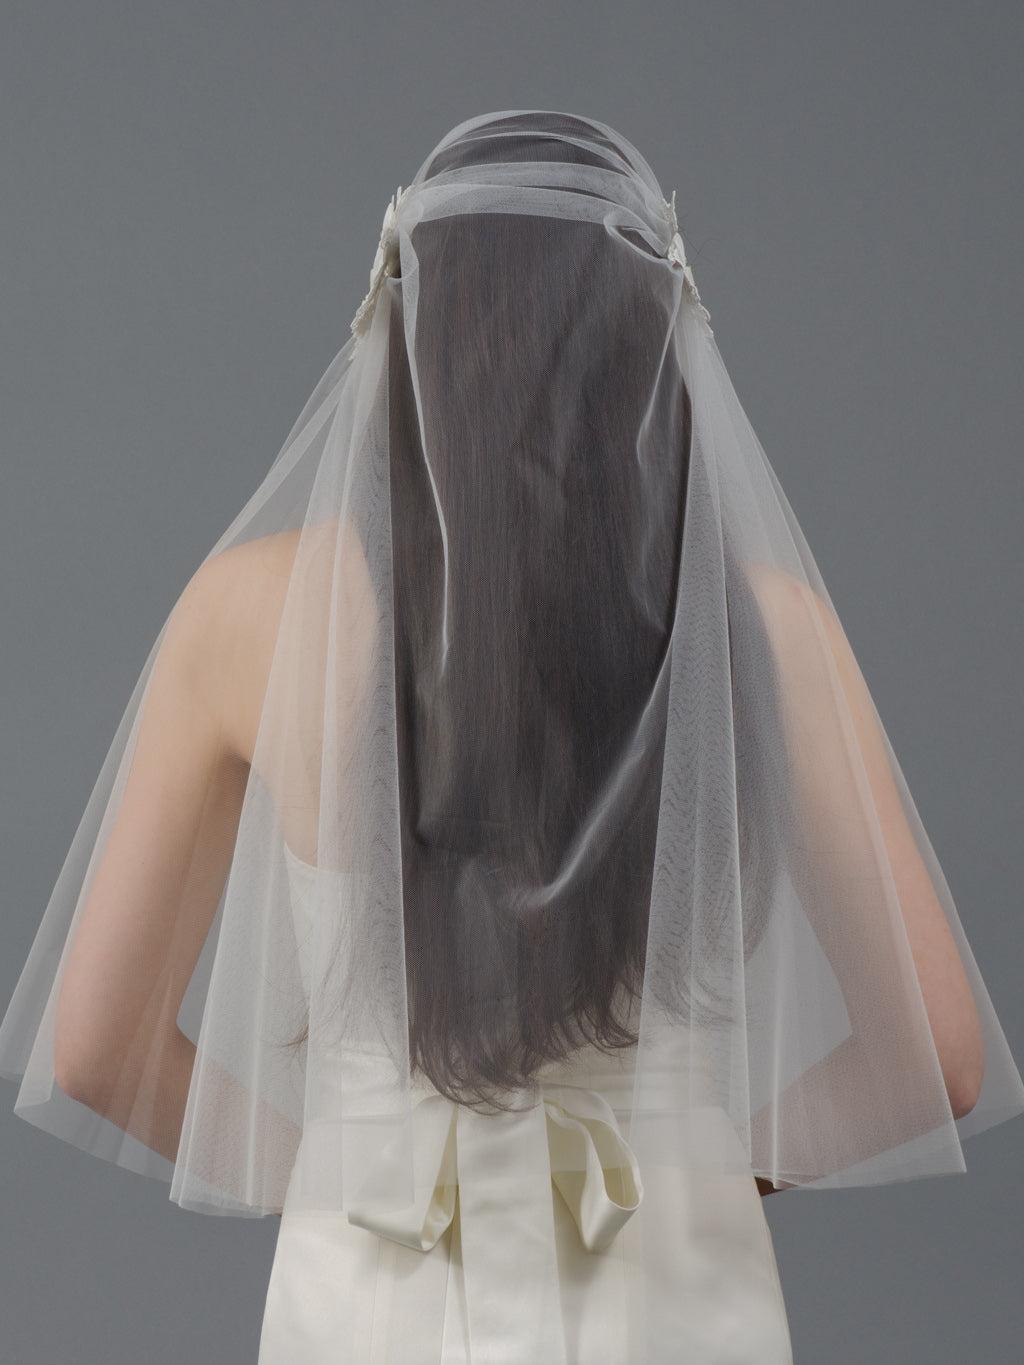 Ivory juliet cap wedding veil V047